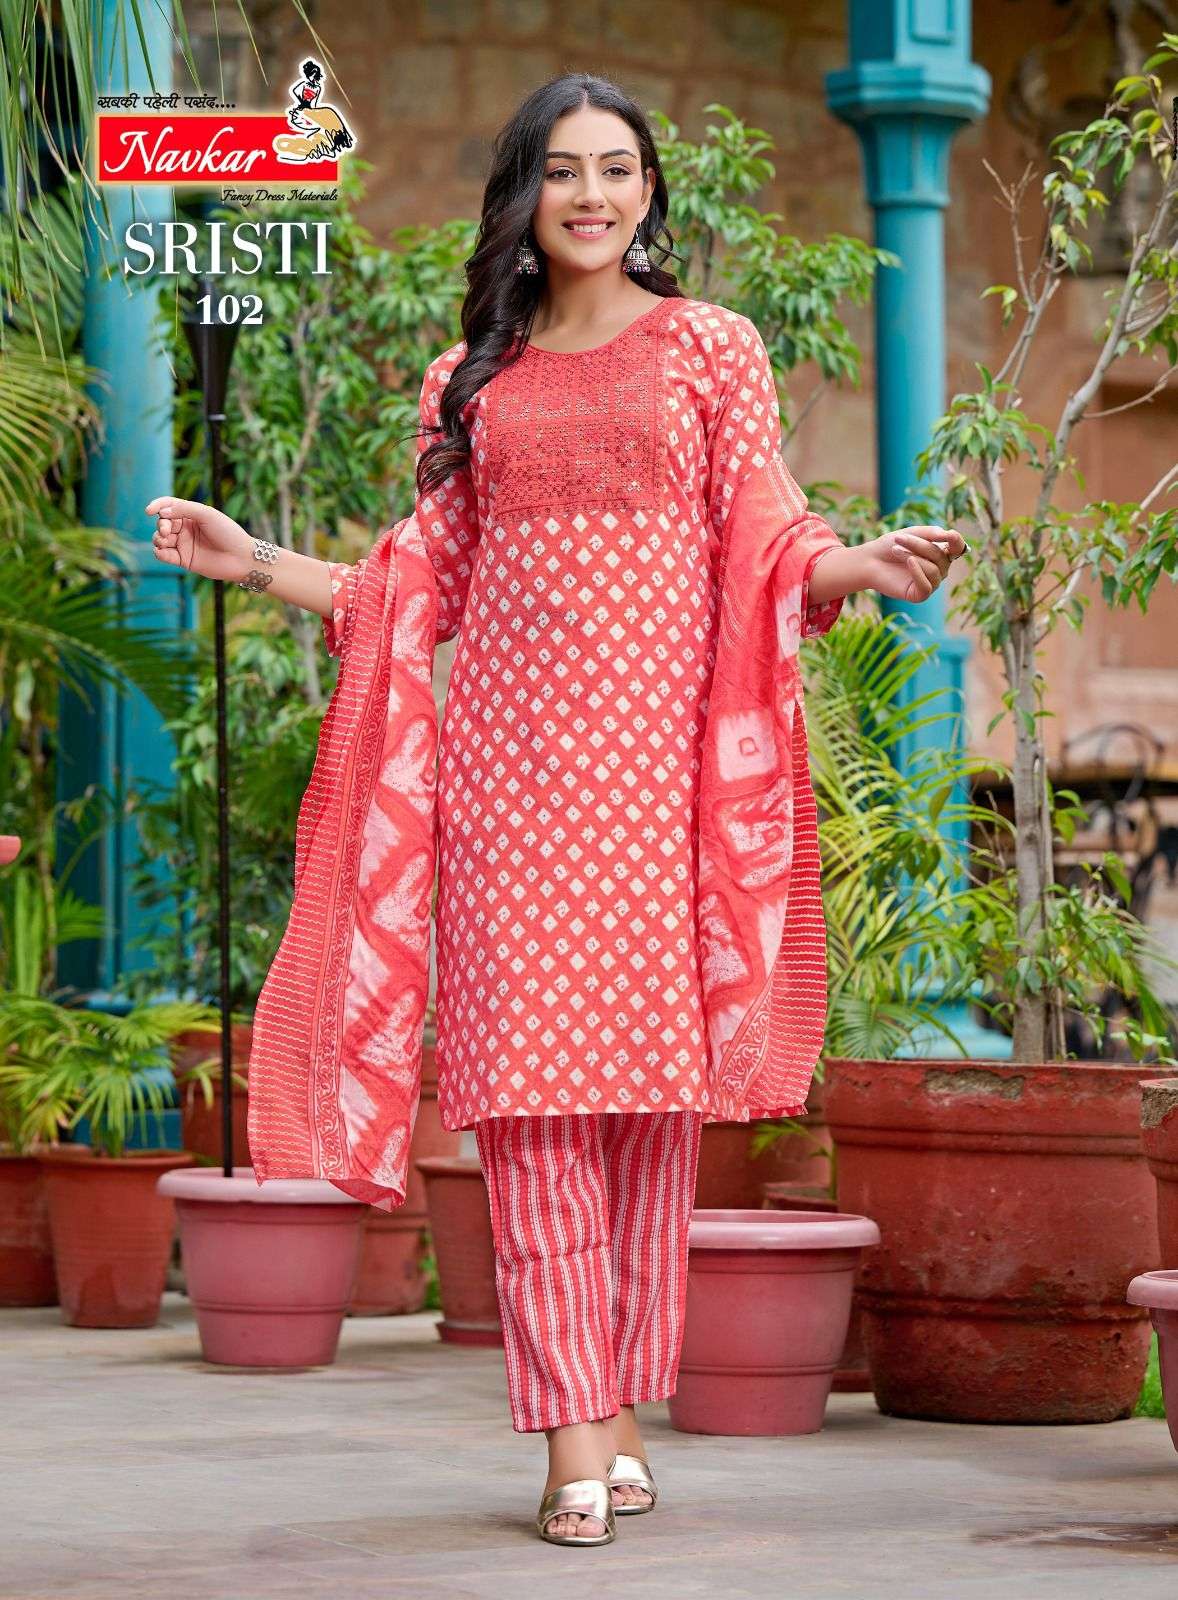 navkar sristi 101-108 series cotton designer dress readymade collection surat